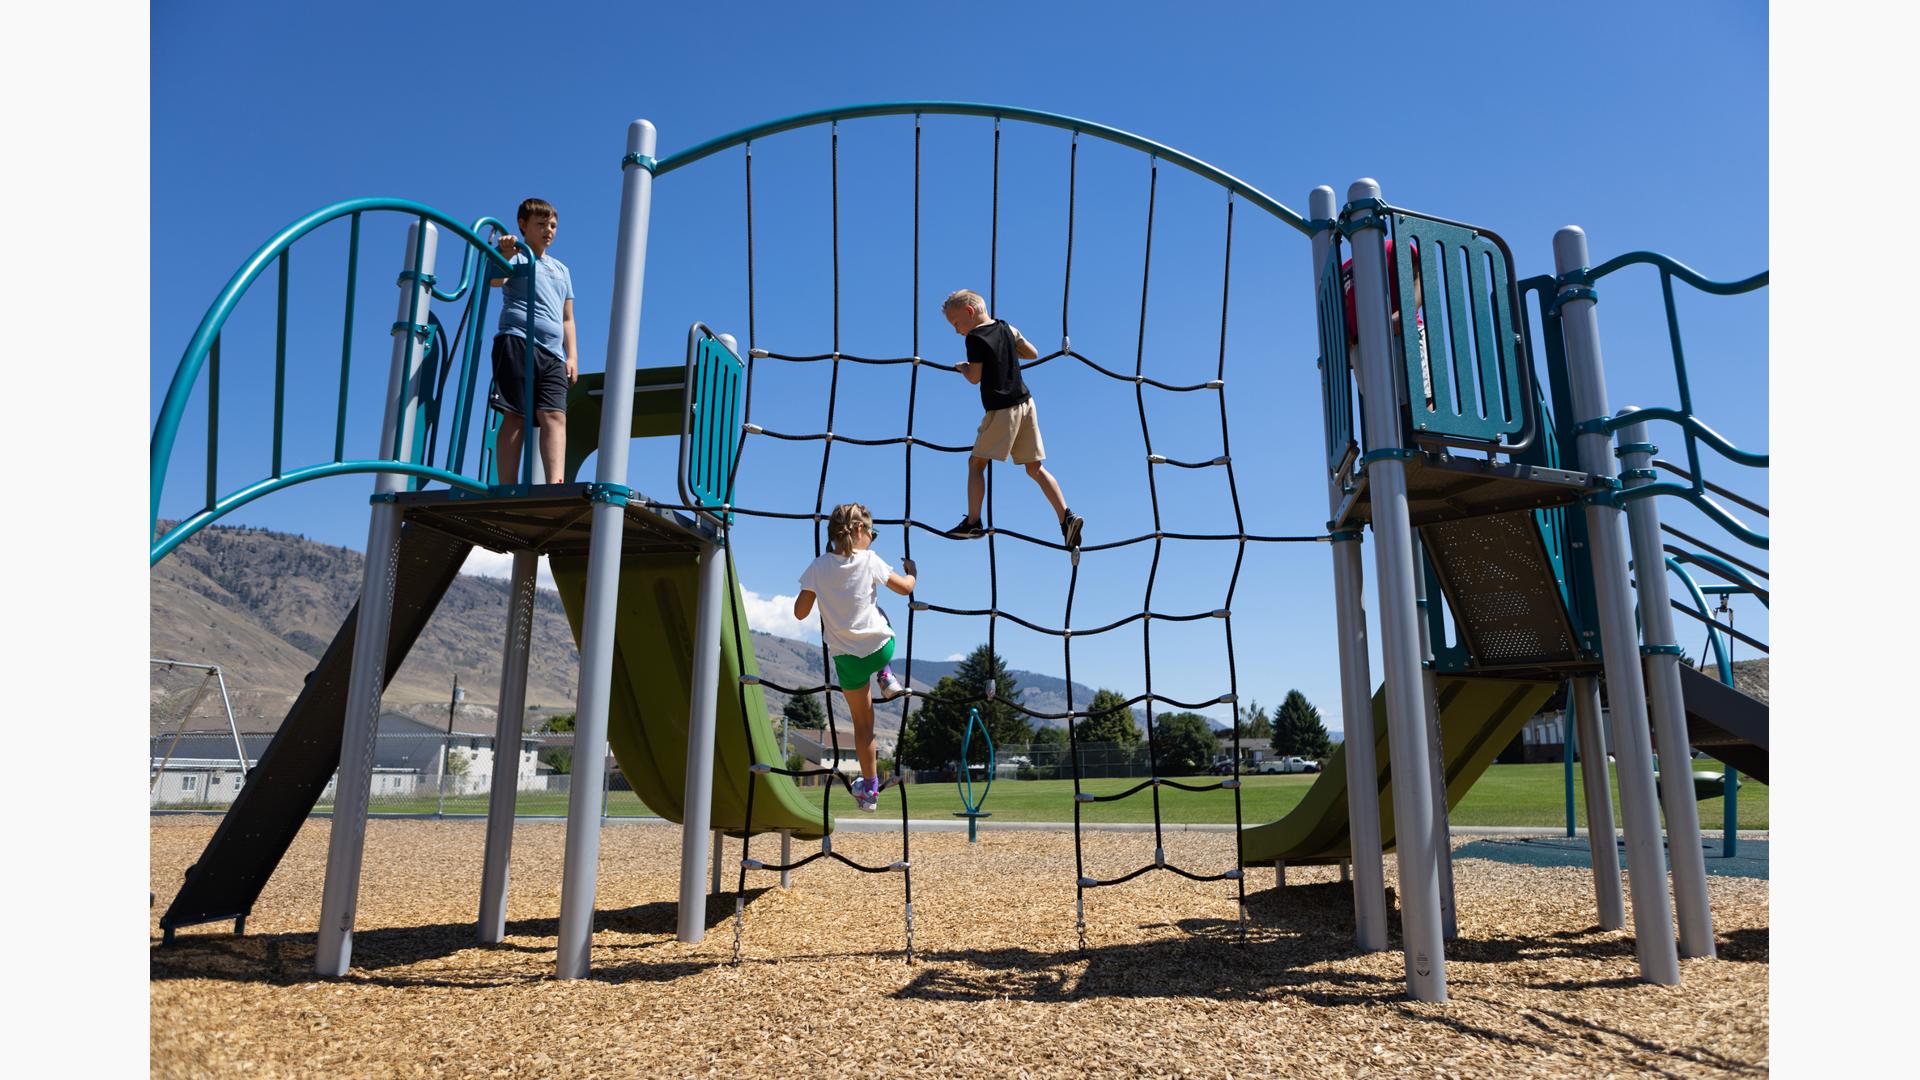 Blue mountain park – Rotary playground – Playgrounds Vancouver